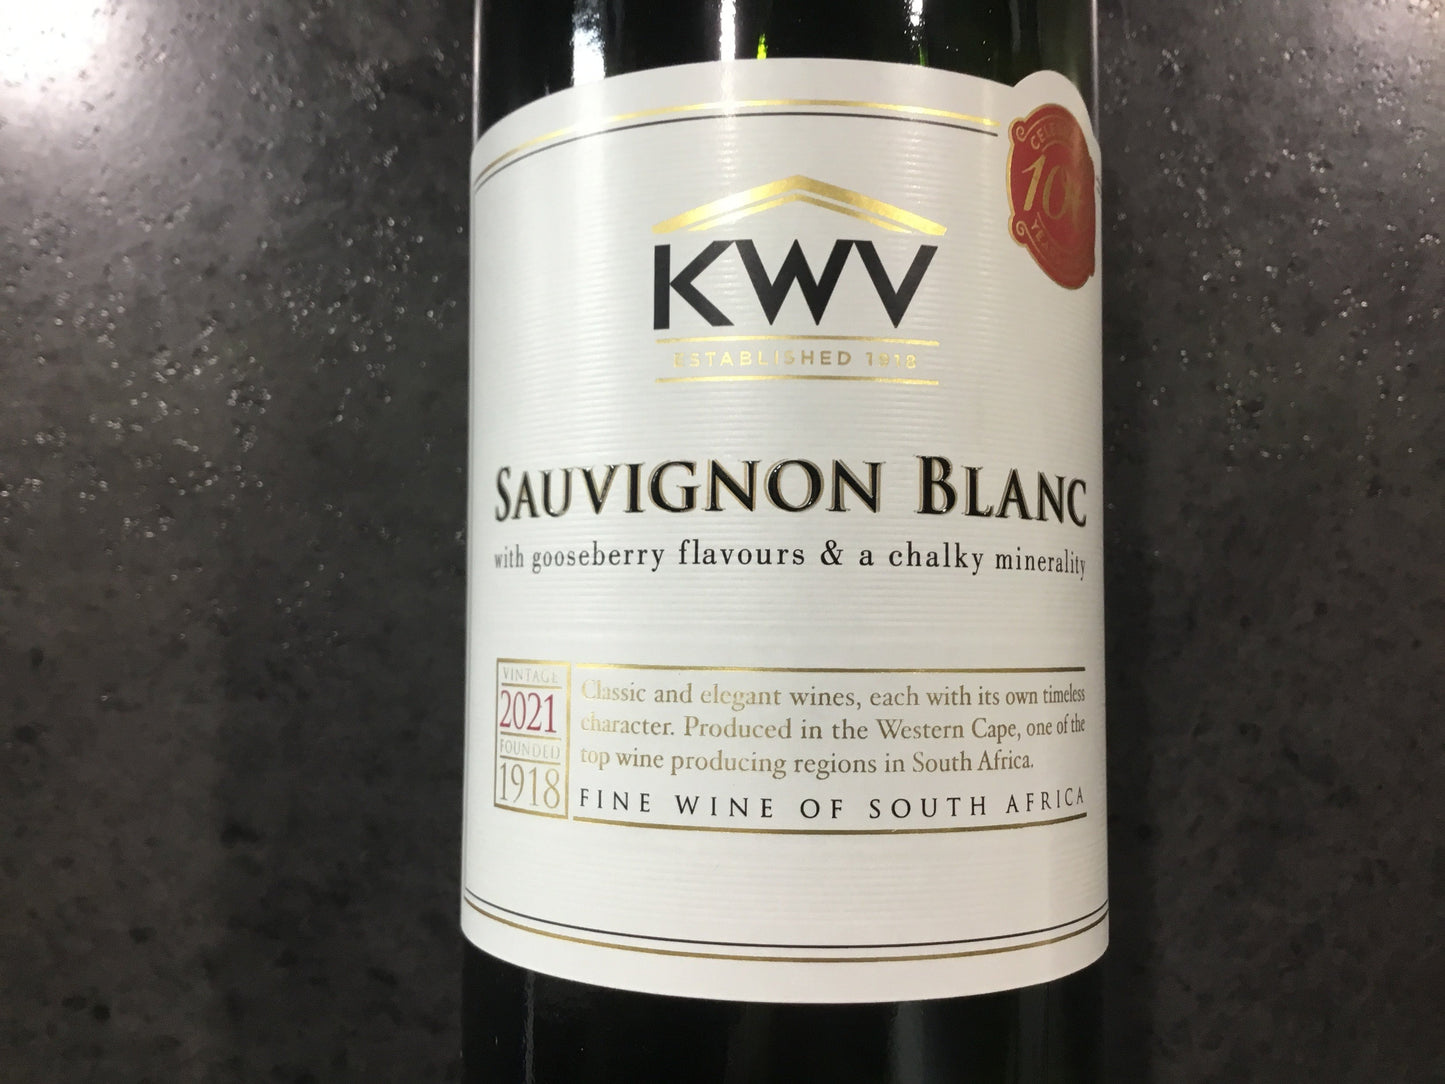 KWV Sauvignon Blanc 750ml